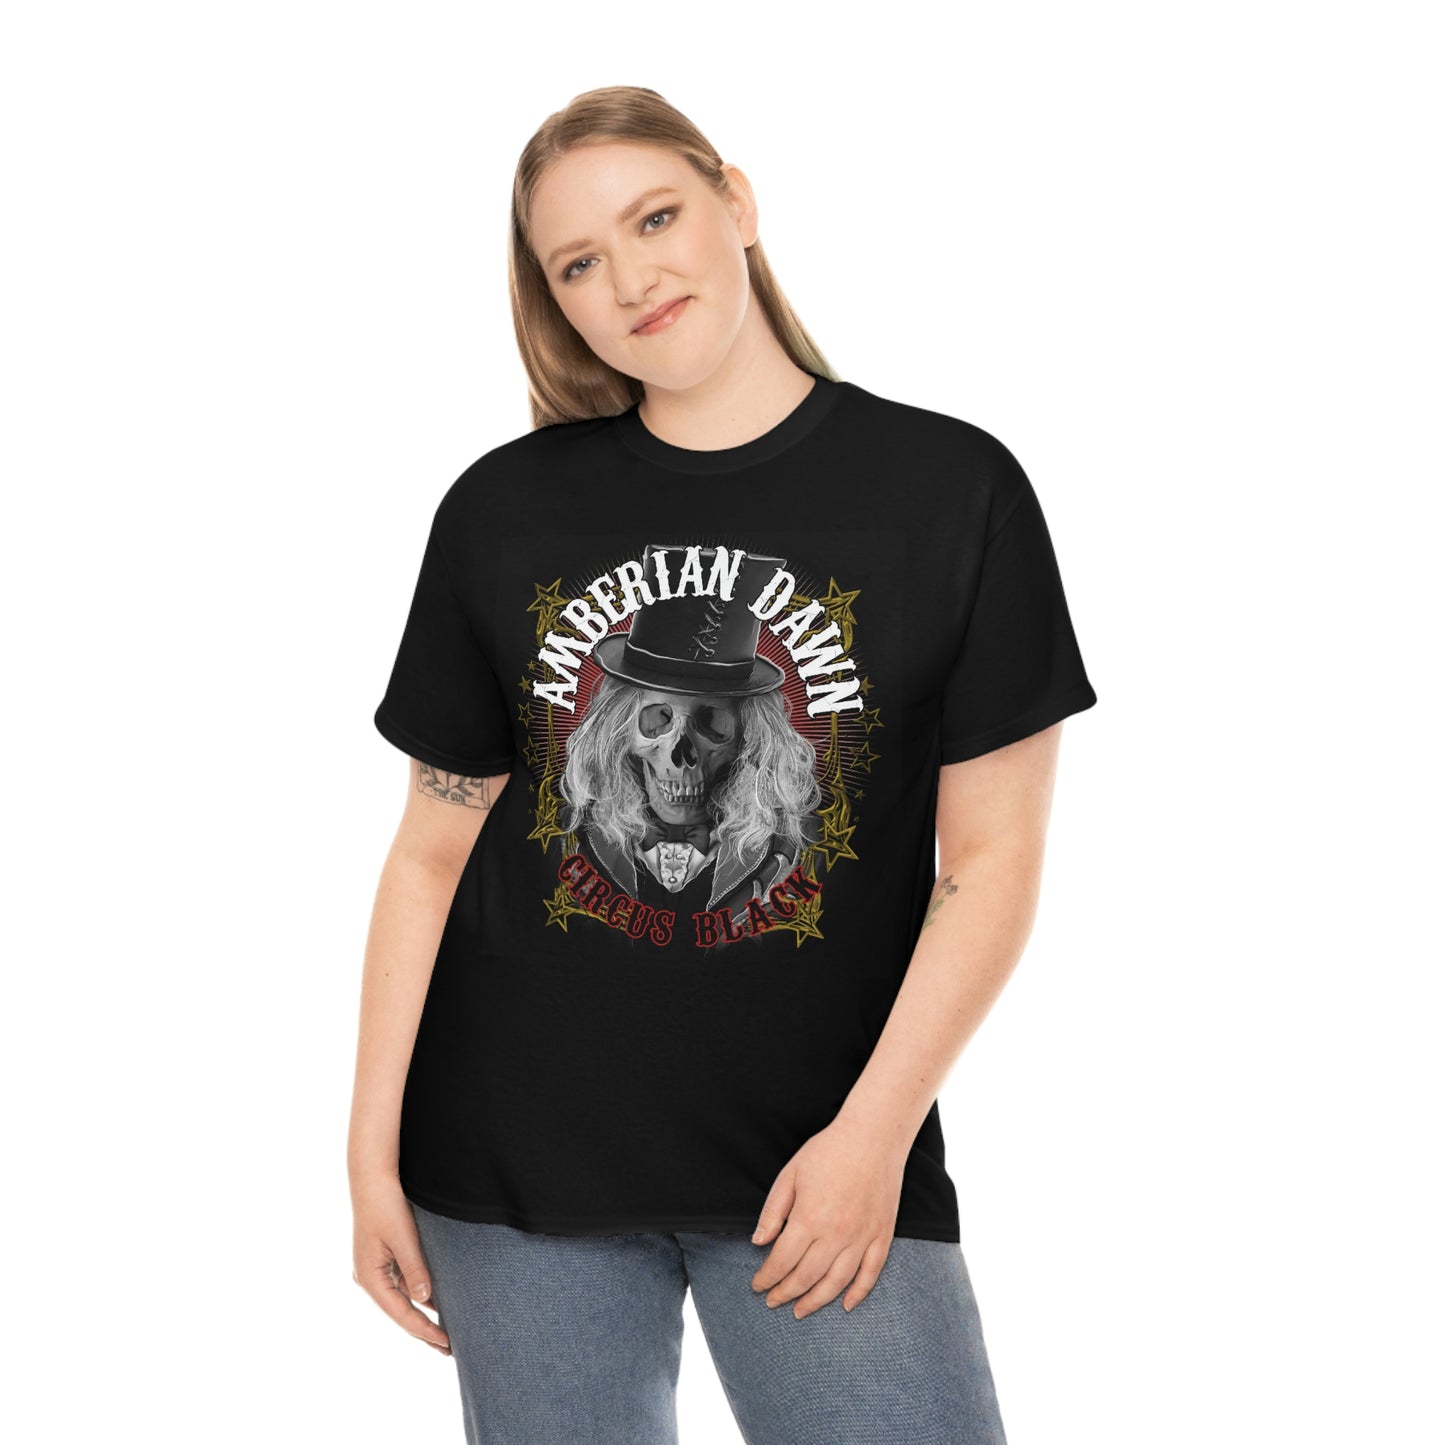 Circus Black Full Colors T-shirt, USA